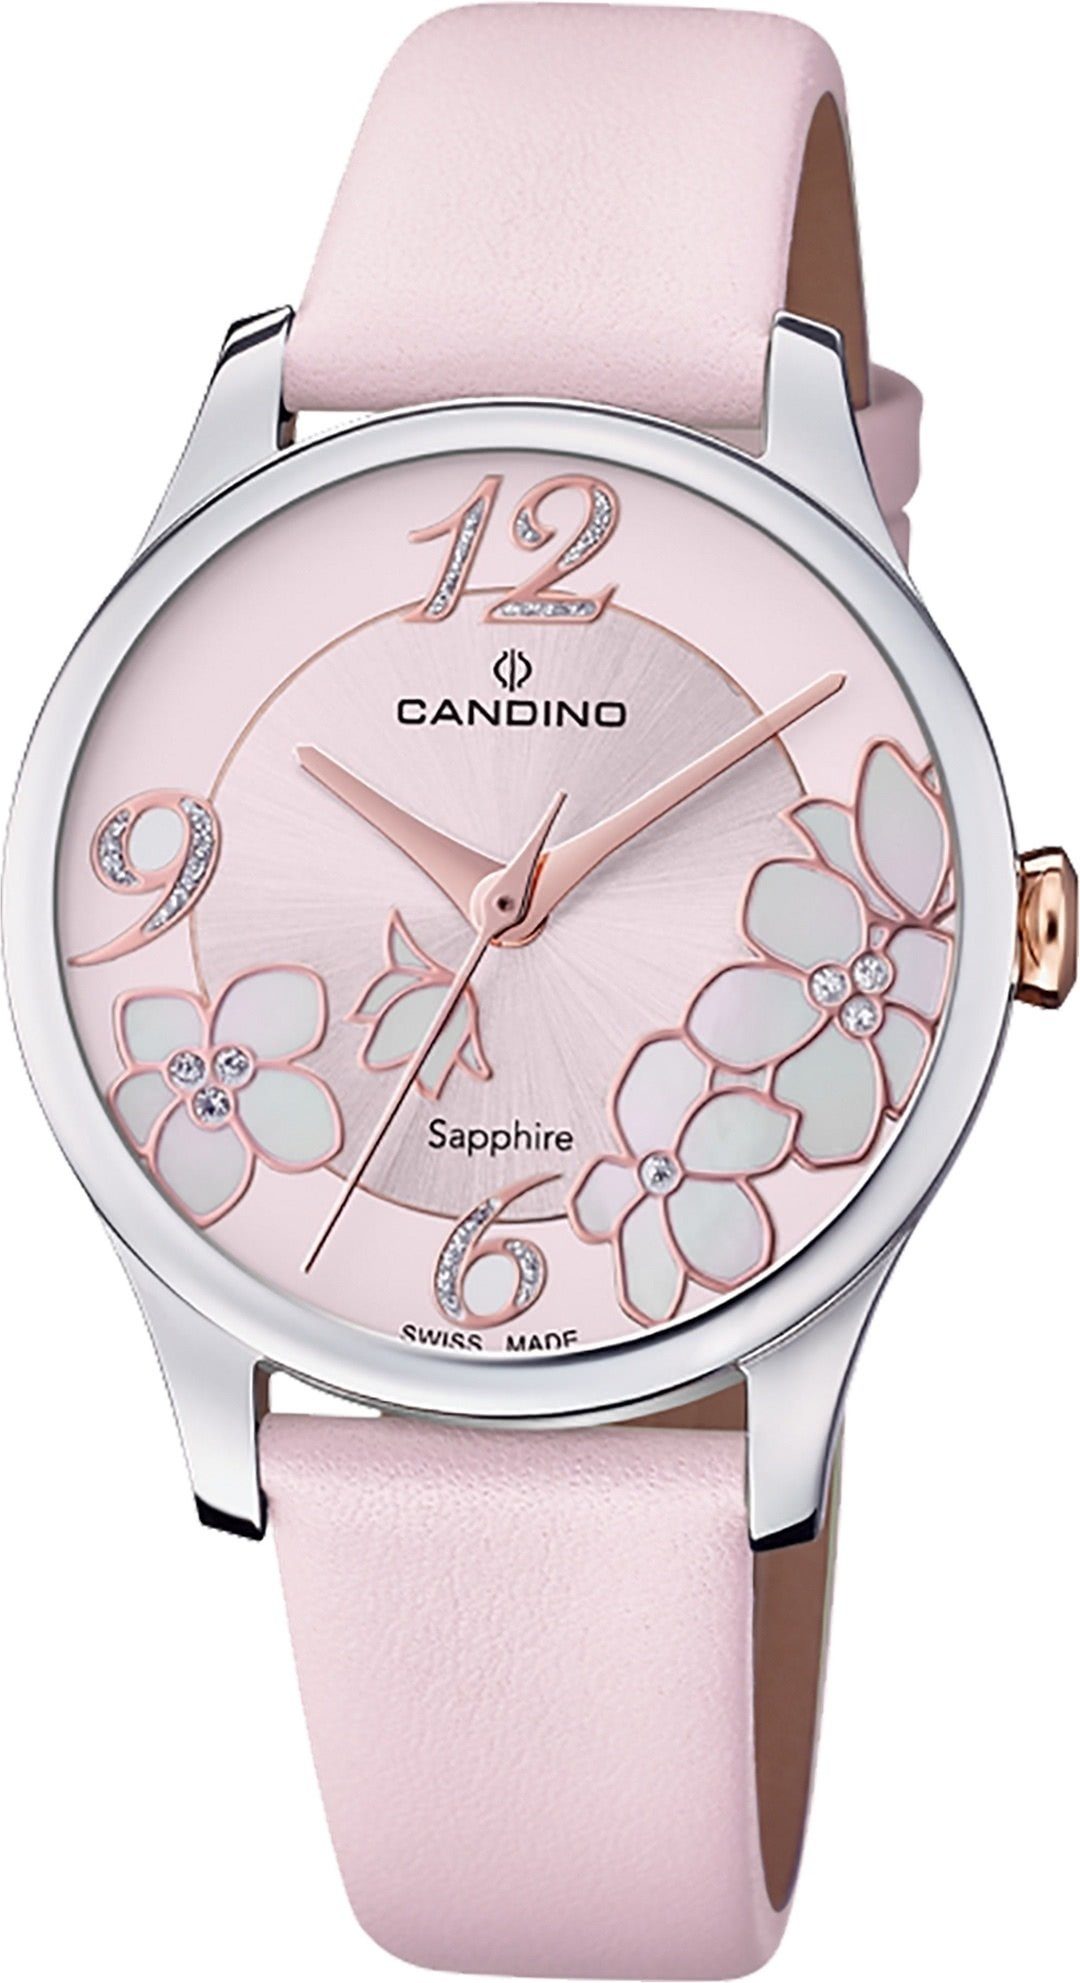 Candino Quarzuhr Candino Damen Armbanduhr Elegance, (Analoguhr), Damen Armbanduhr rund, Lederarmband rosa, Fashion